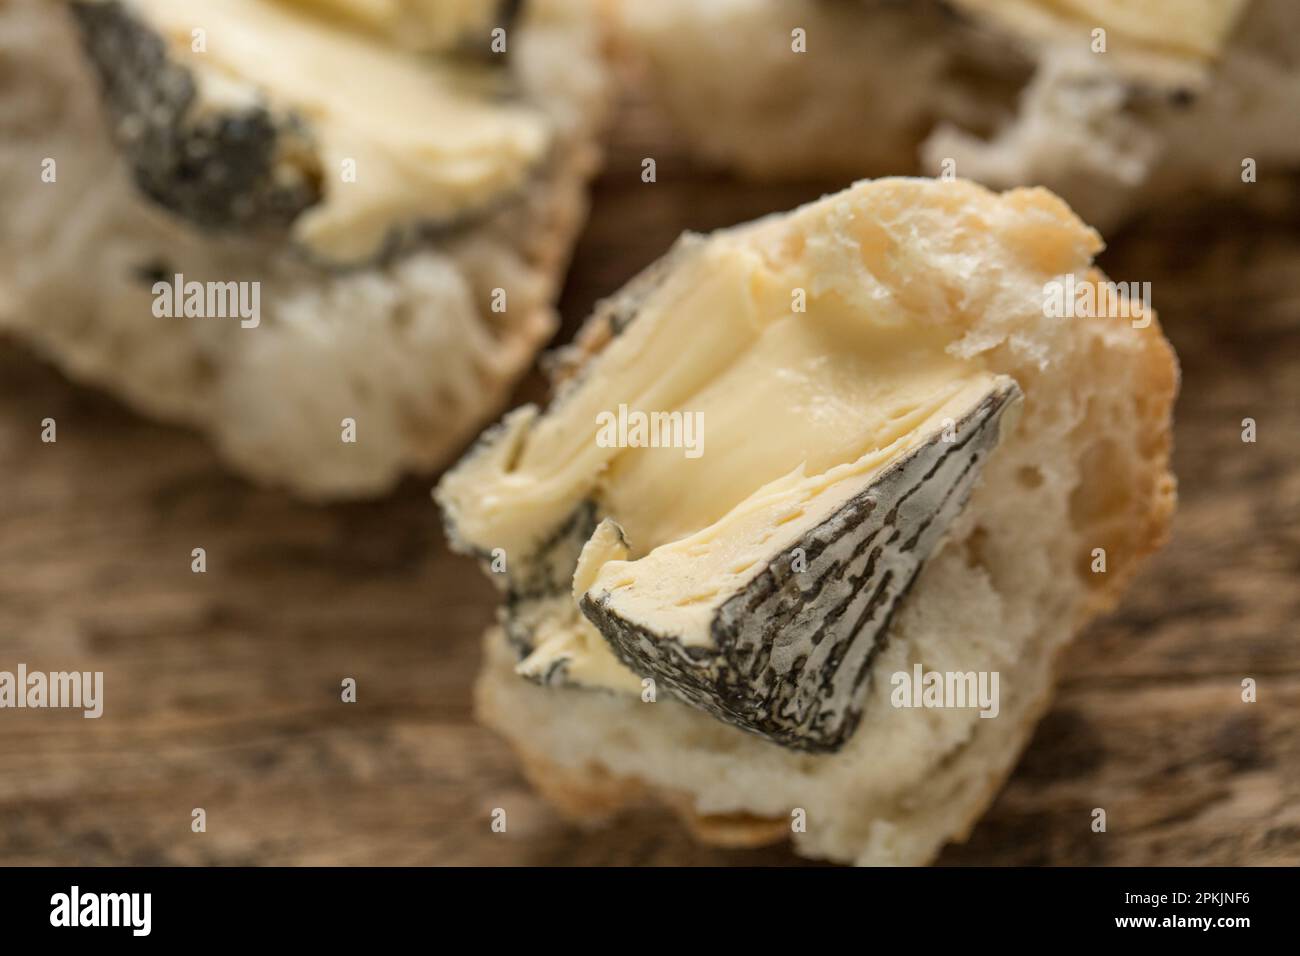 Shepherds Purse Bluemin White cheese on crusty bread. England UK GB Stock Photo